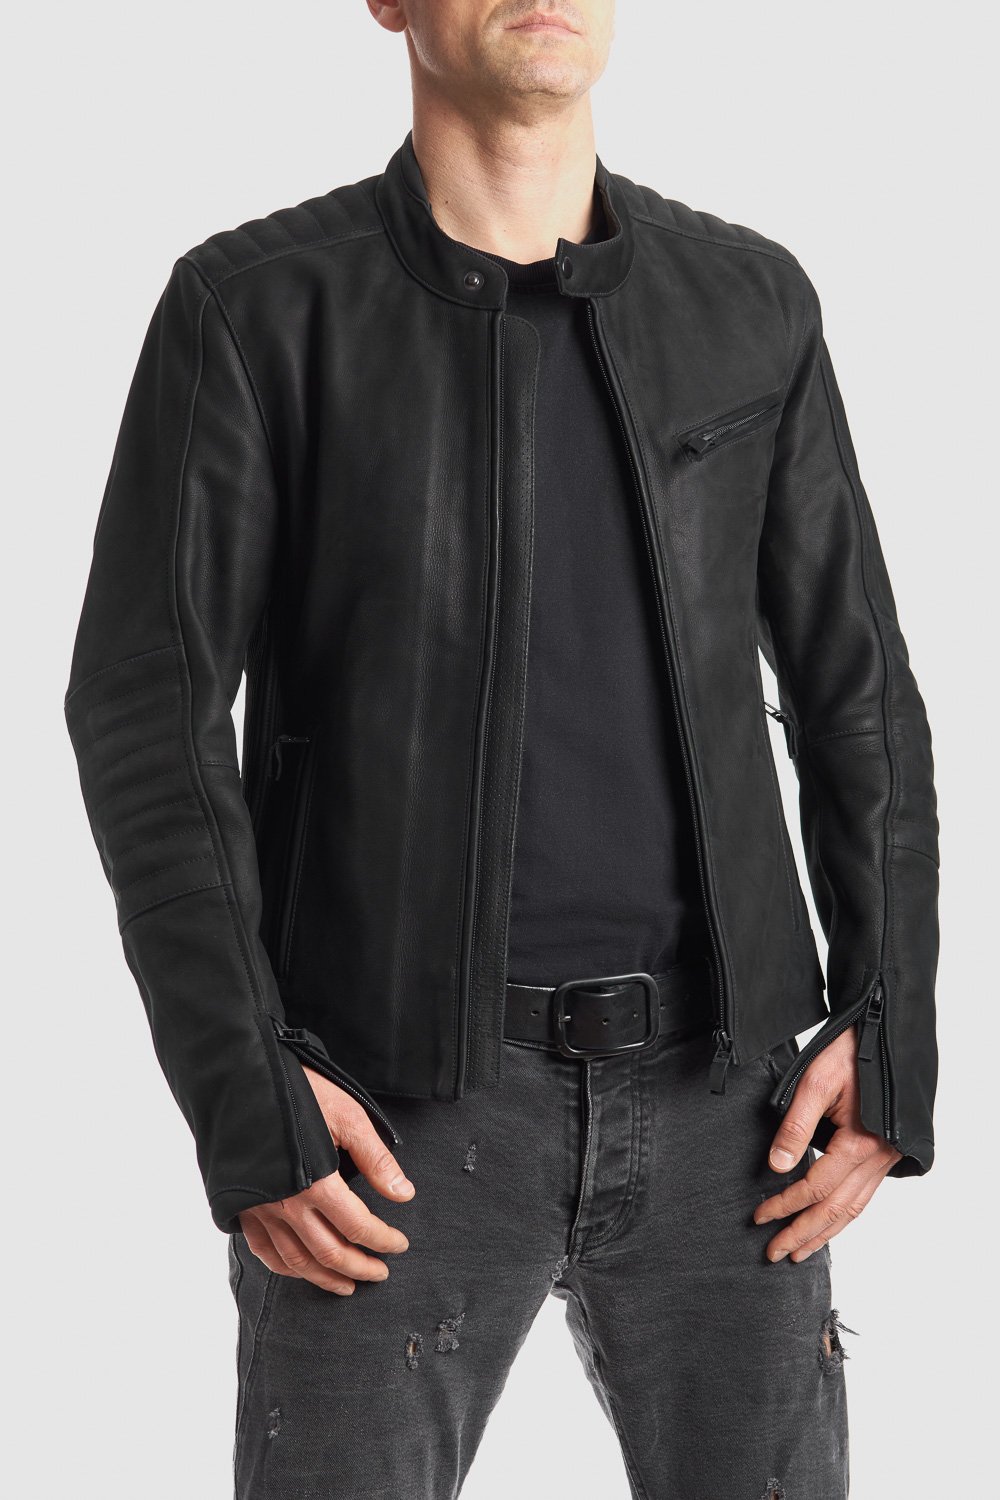 Image of Pando Moto Leather Tatami Lt 1 Jacket Men Black Size M EN